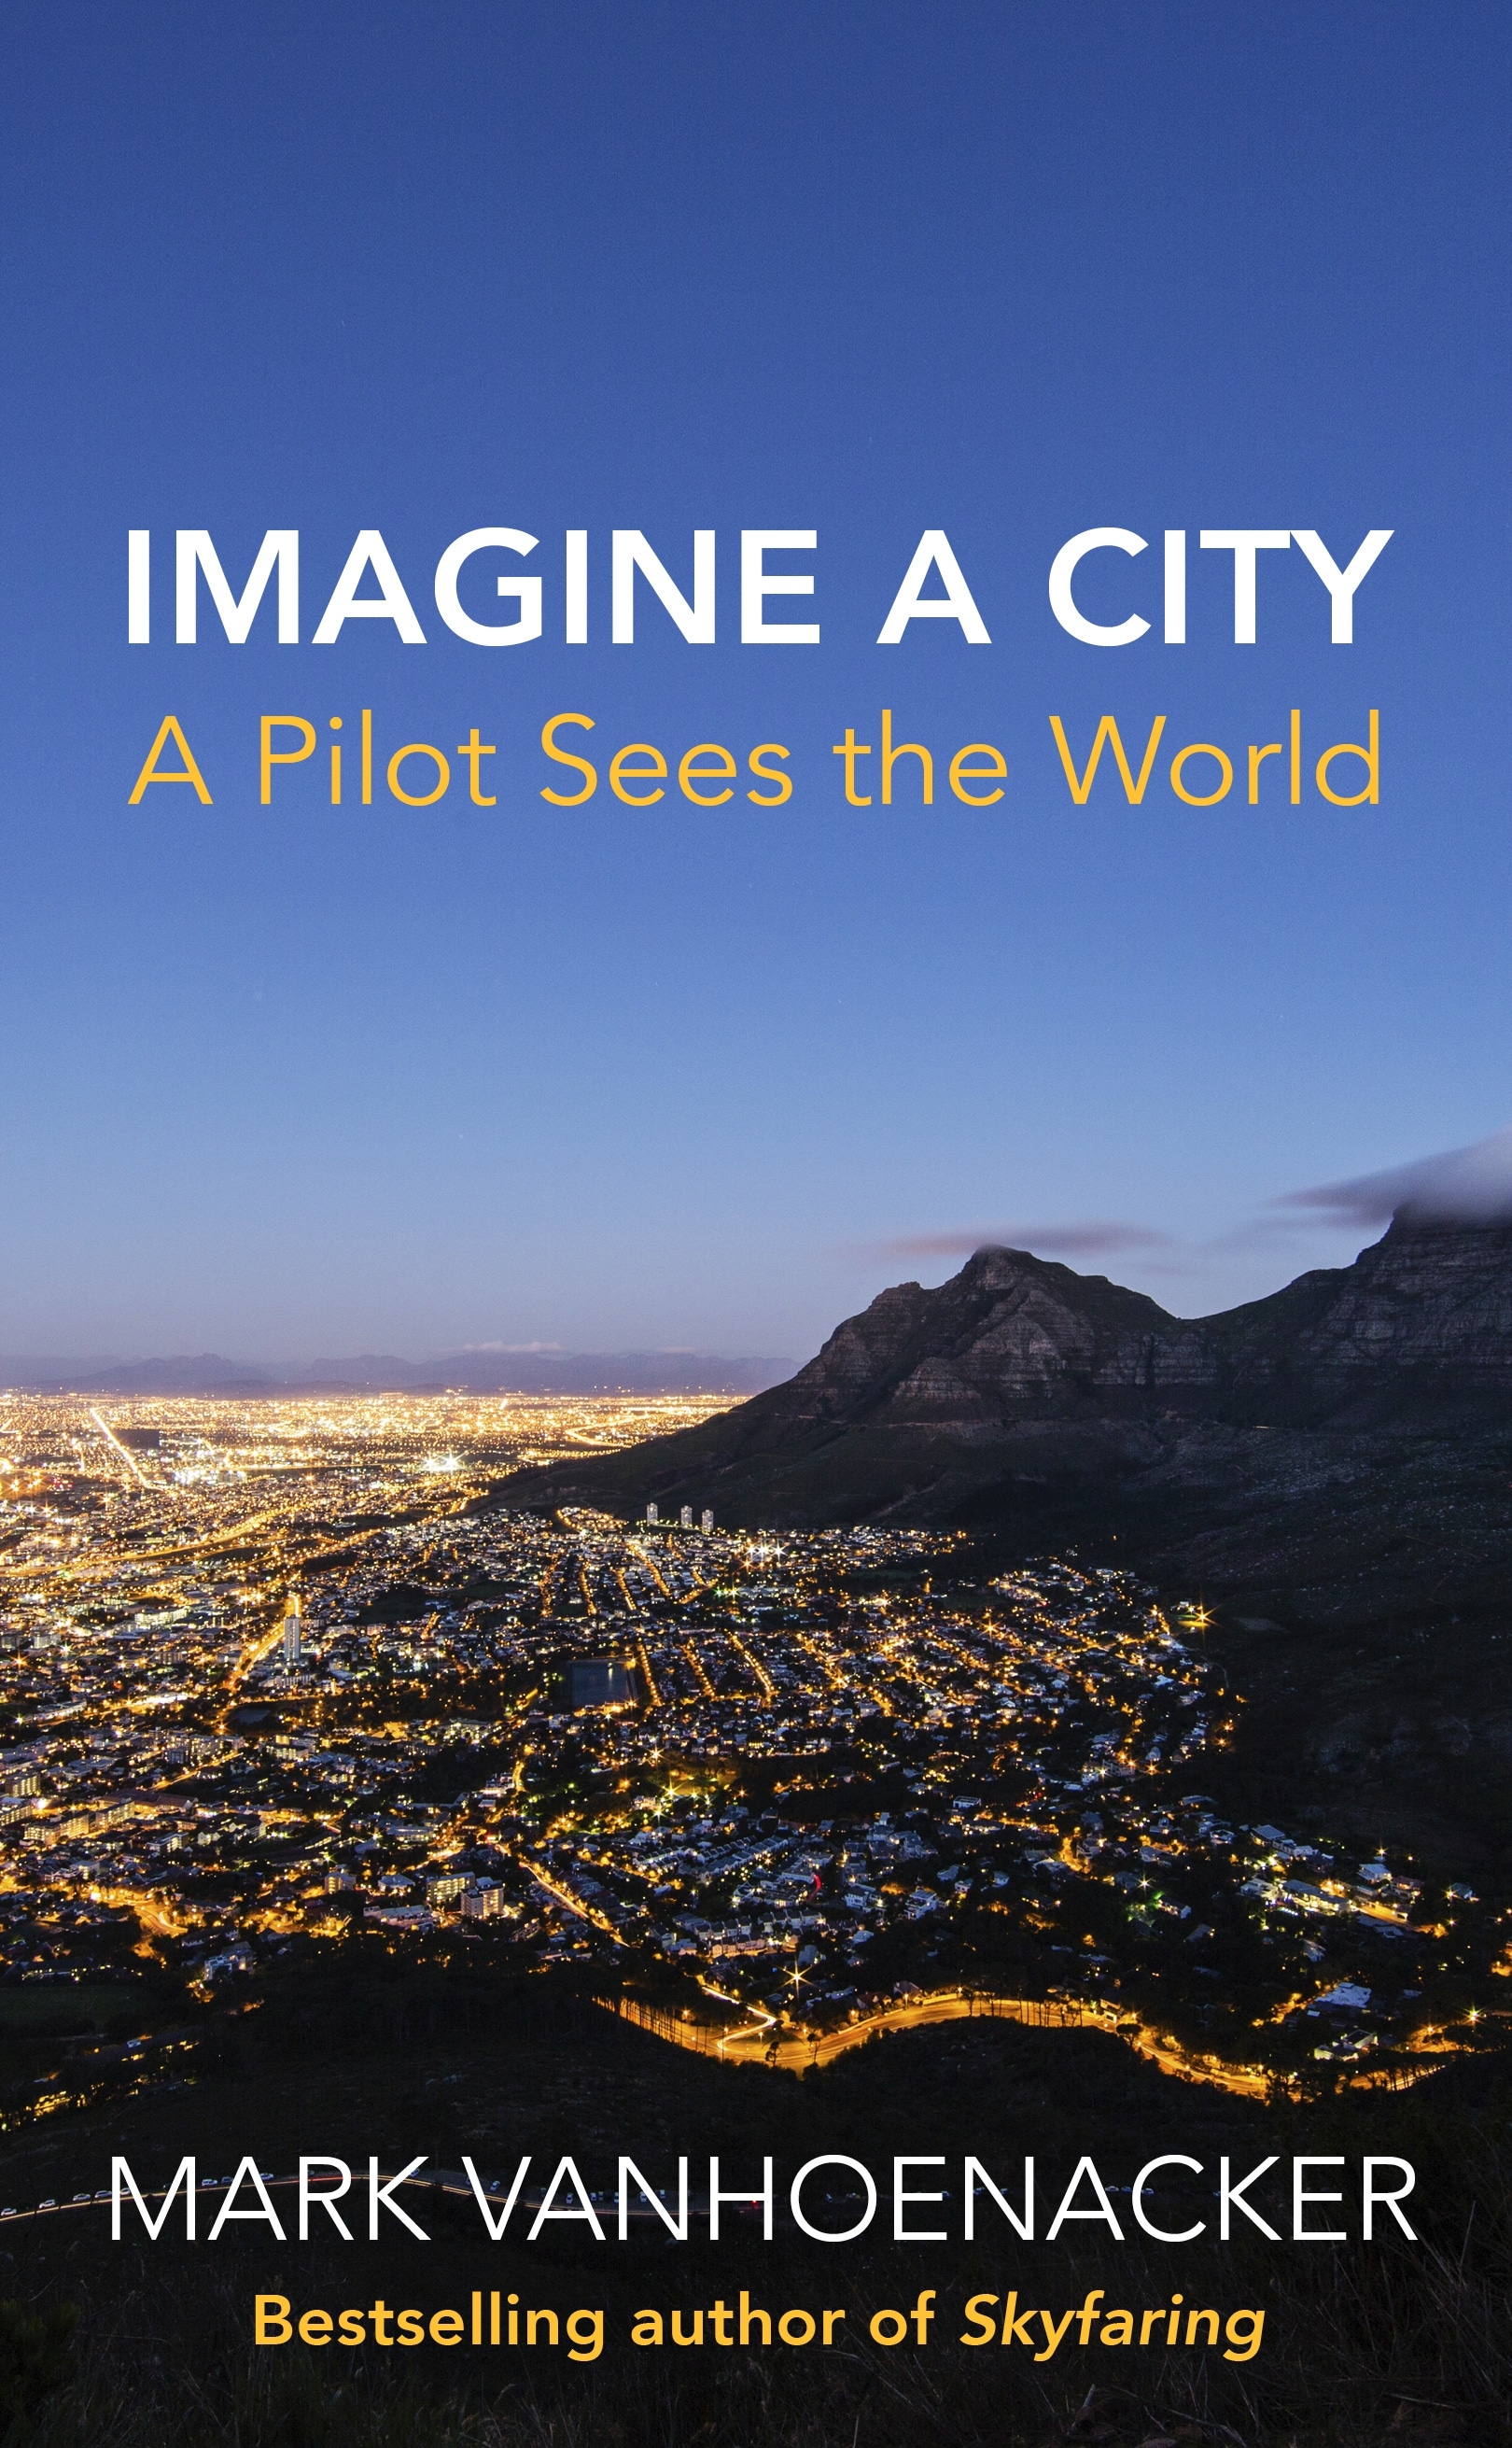 Book “Imagine a City” by Mark Vanhoenacker — May 12, 2022